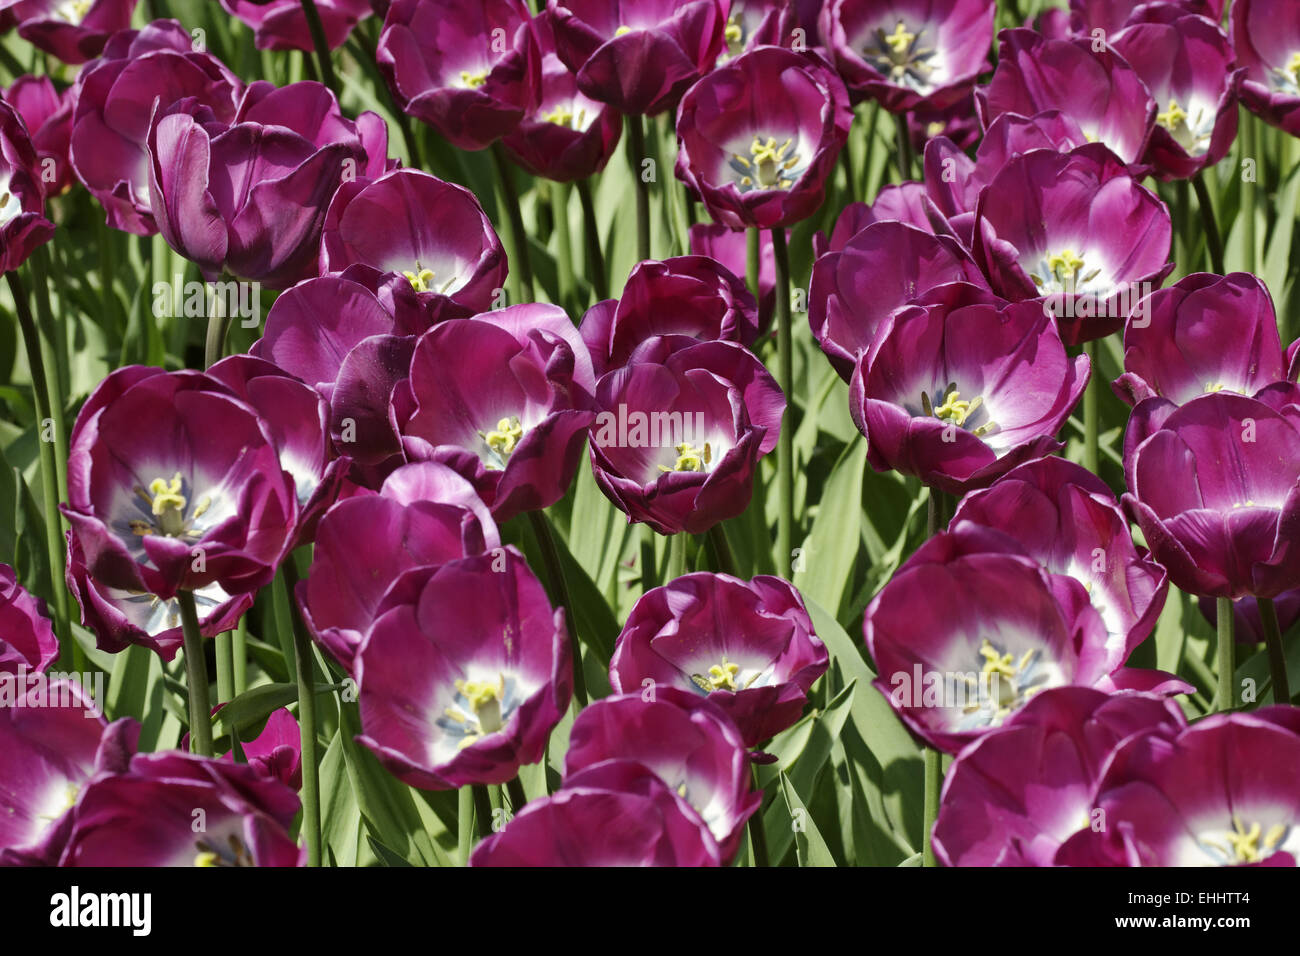 Trionfo tulip Negrita Foto Stock